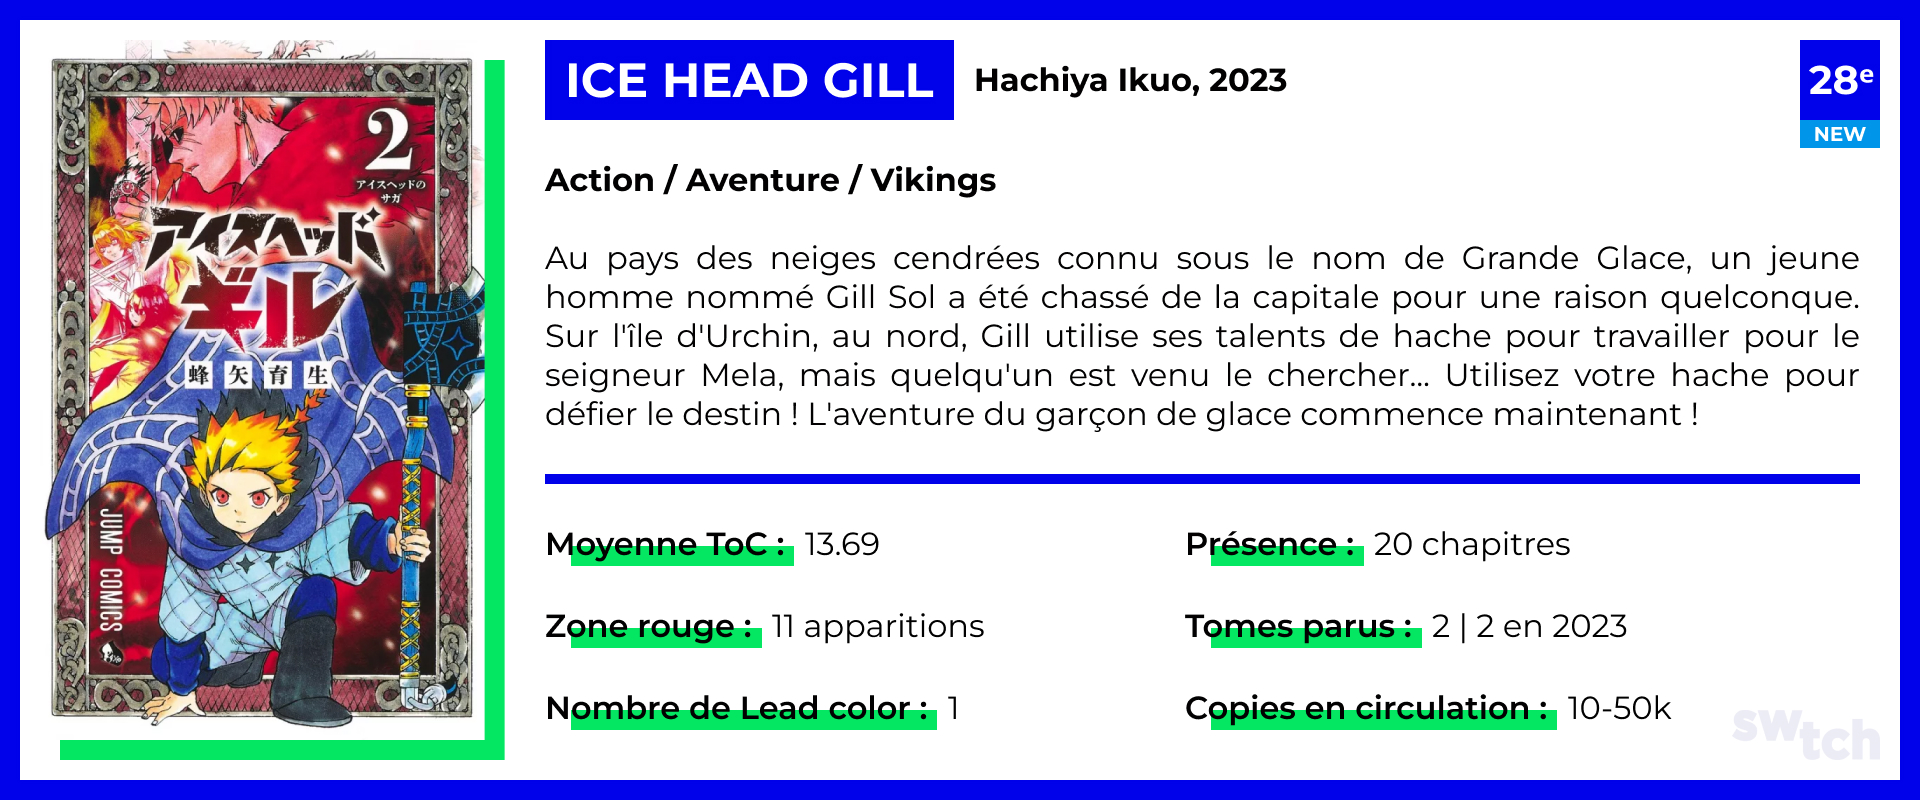 Ice Head Gill